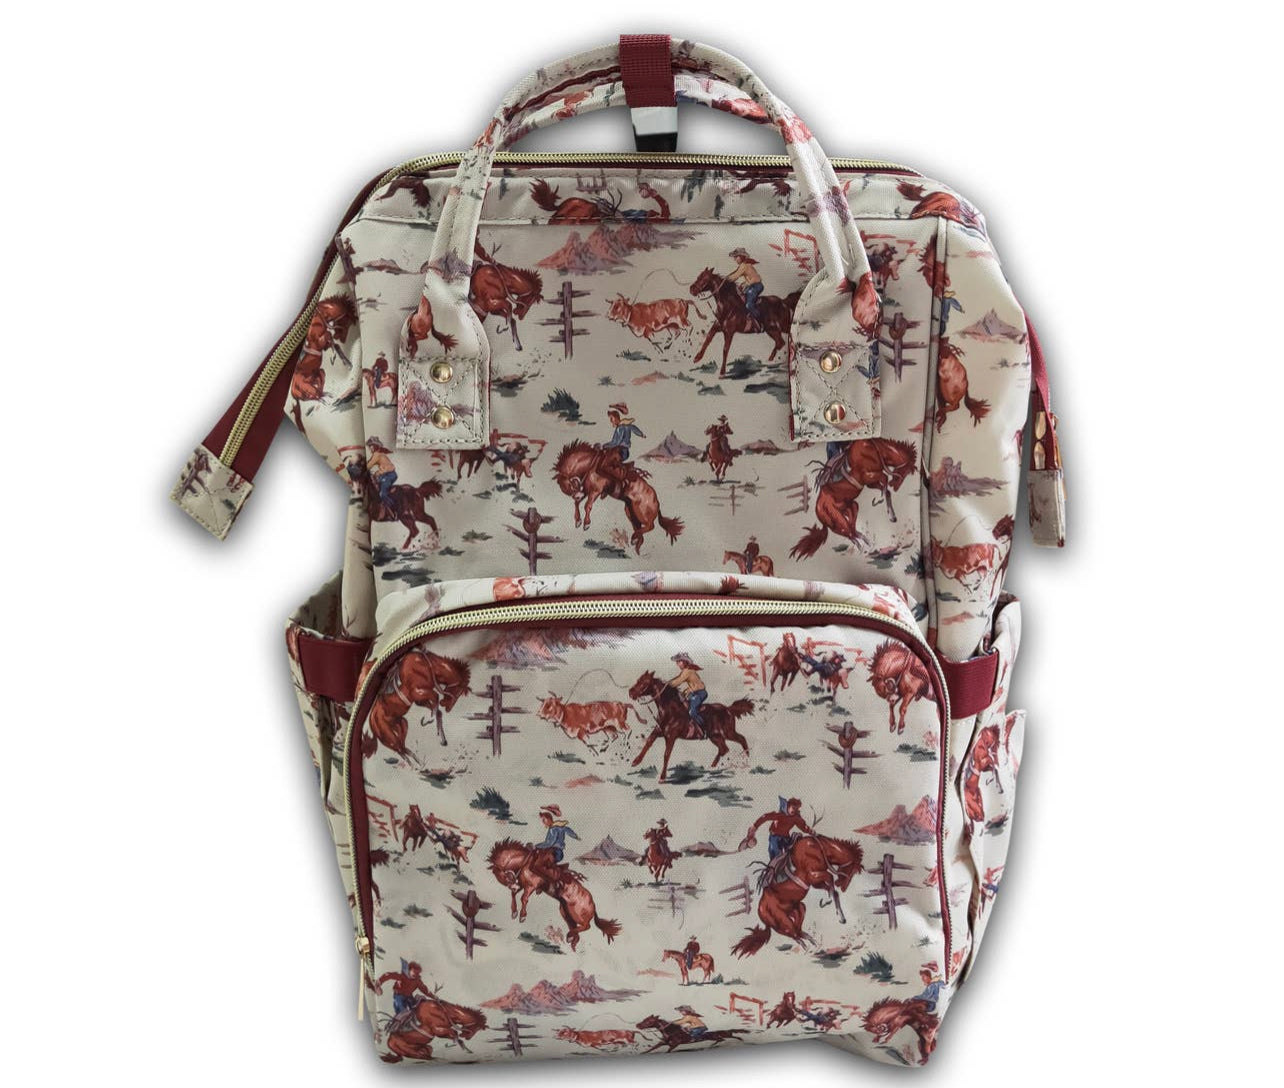 Western Backpack/ Diaper Bag